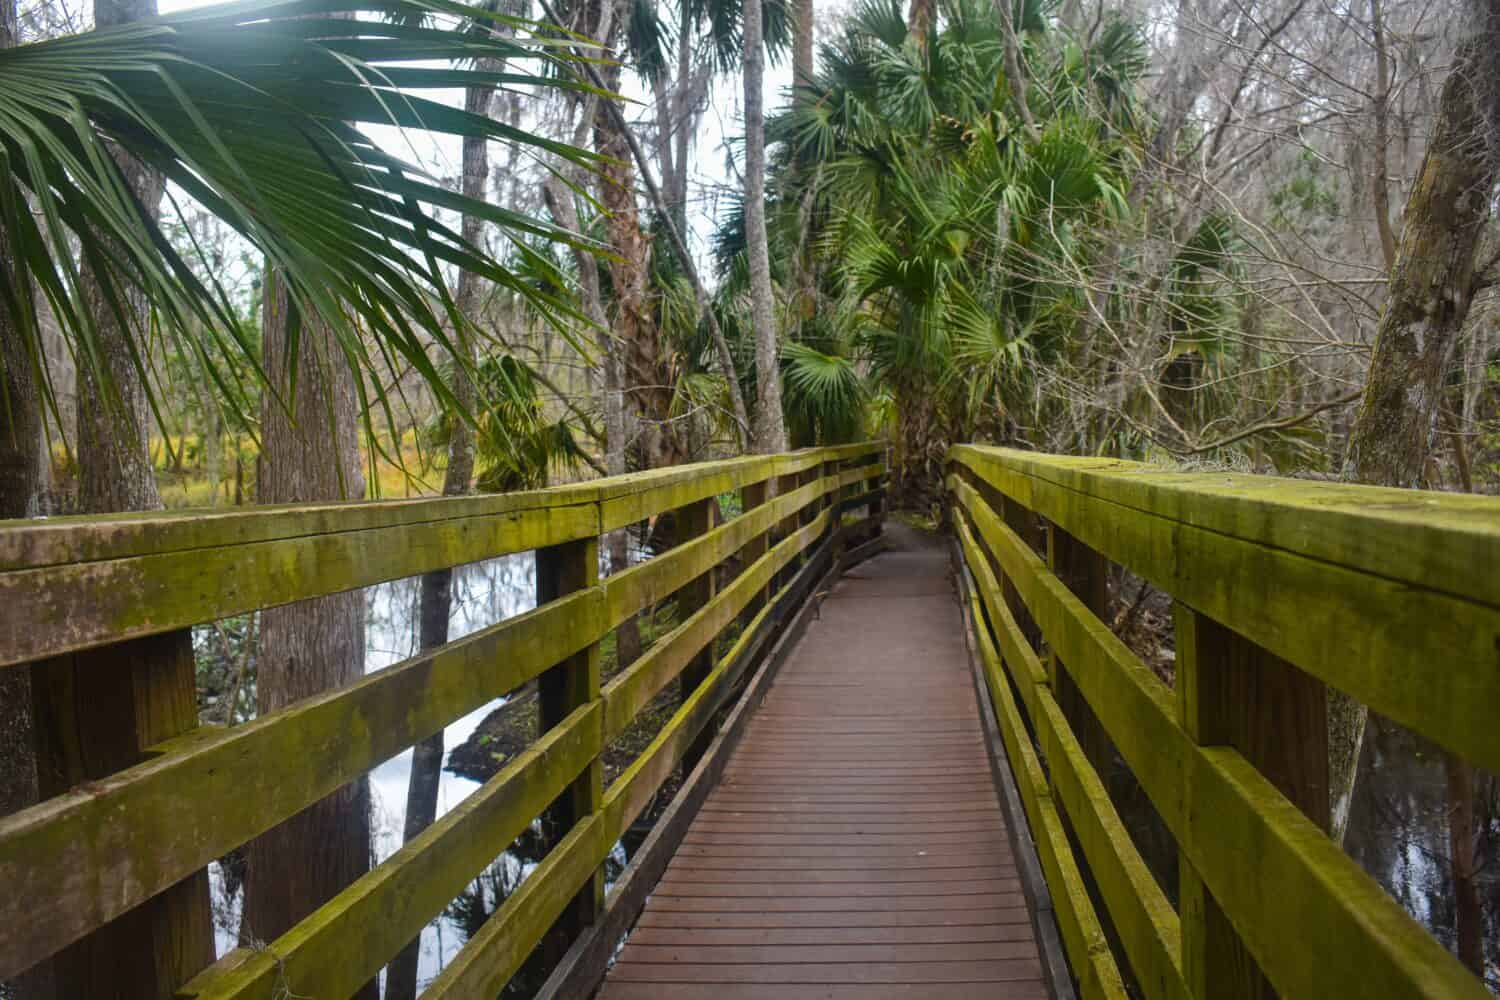 Wooden boardwalk among palm trees in Black Bear Wilderness area, Sanford, Florida